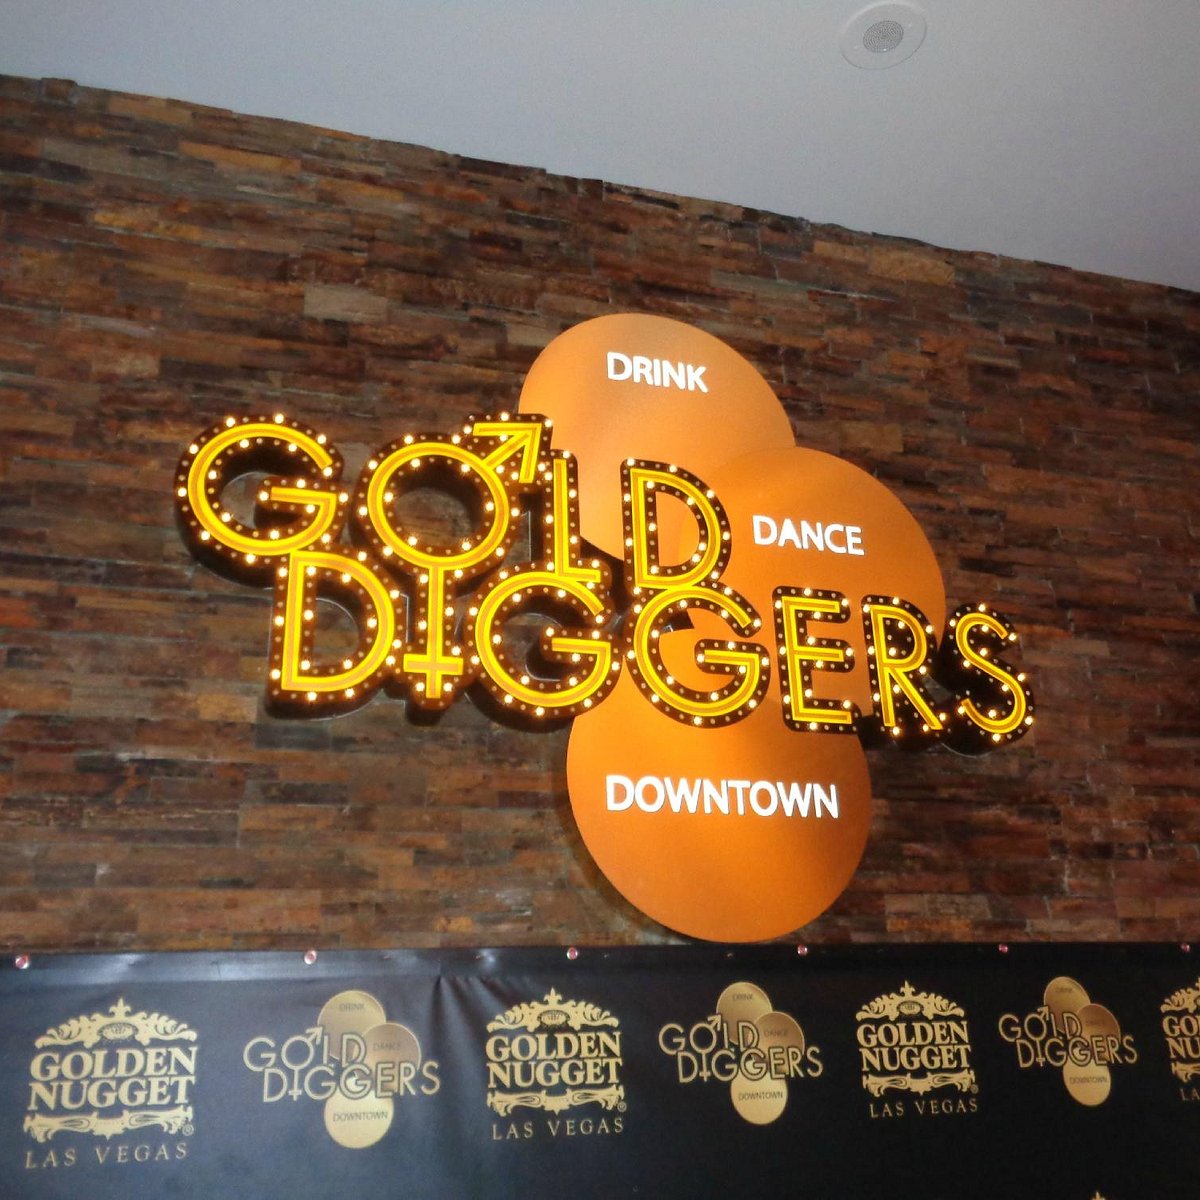 GOLD Diggers Saturday Night -20th April